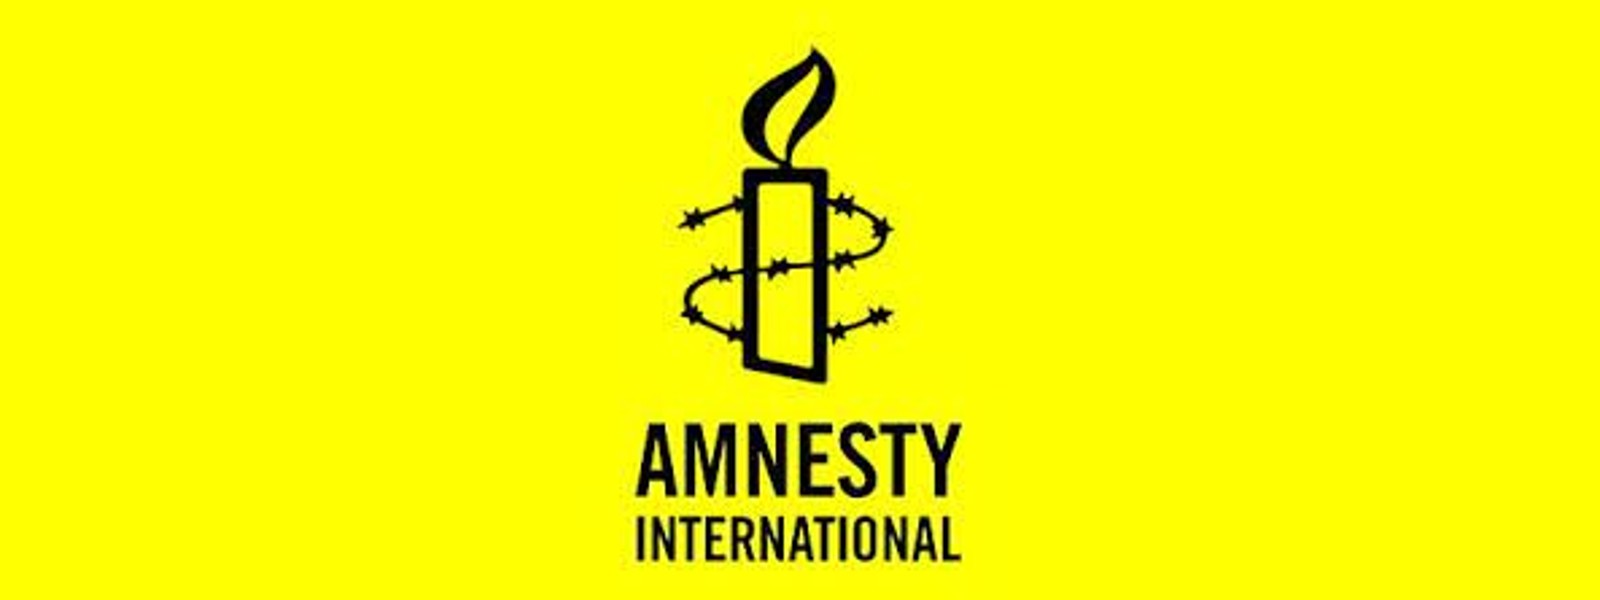 Stop using terrorism act, Amnesty appeals from Sri Lanka